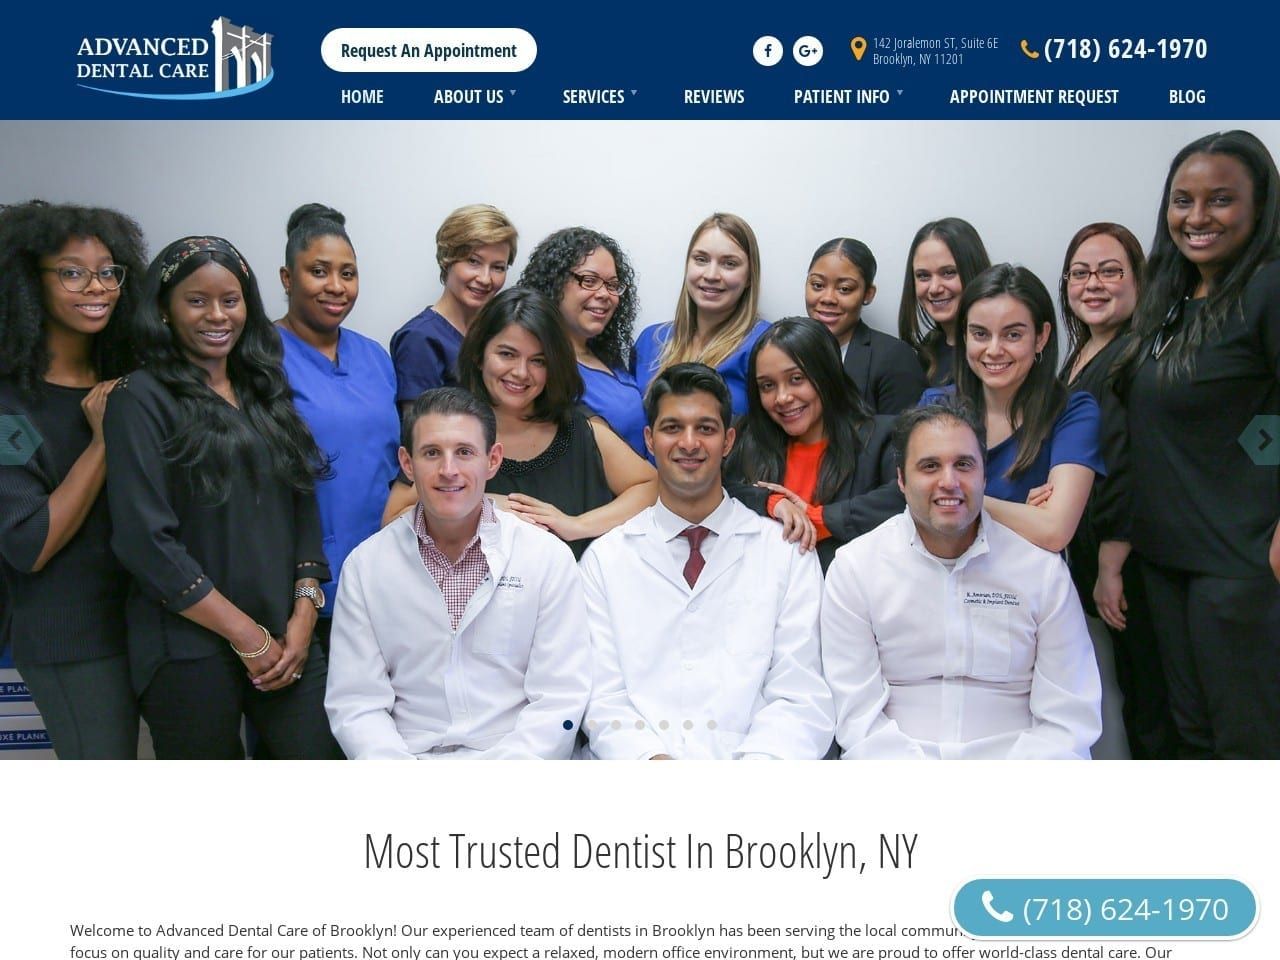 Brooklyn Cosmetic And Implant Dentist Website Screenshot from brooklyndental.com